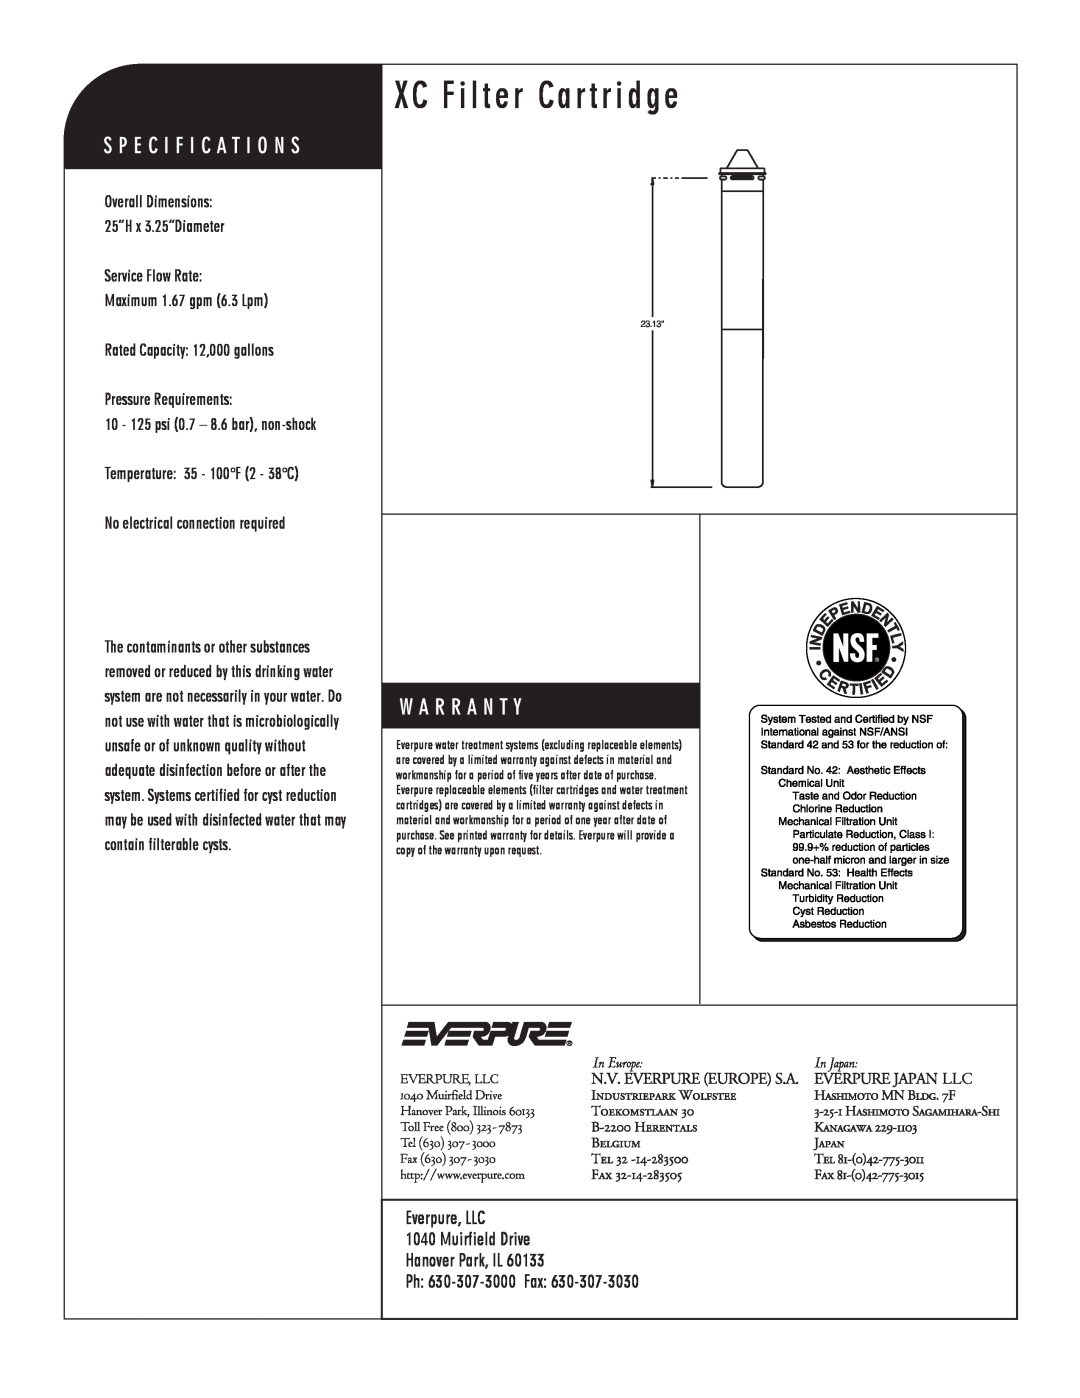 Everpure EV9613-09 manual XC Filter Cartridge, XC Replacement Cartridge, Service Flow Rate Maximum 1.67 gpm 6.3 Lpm 